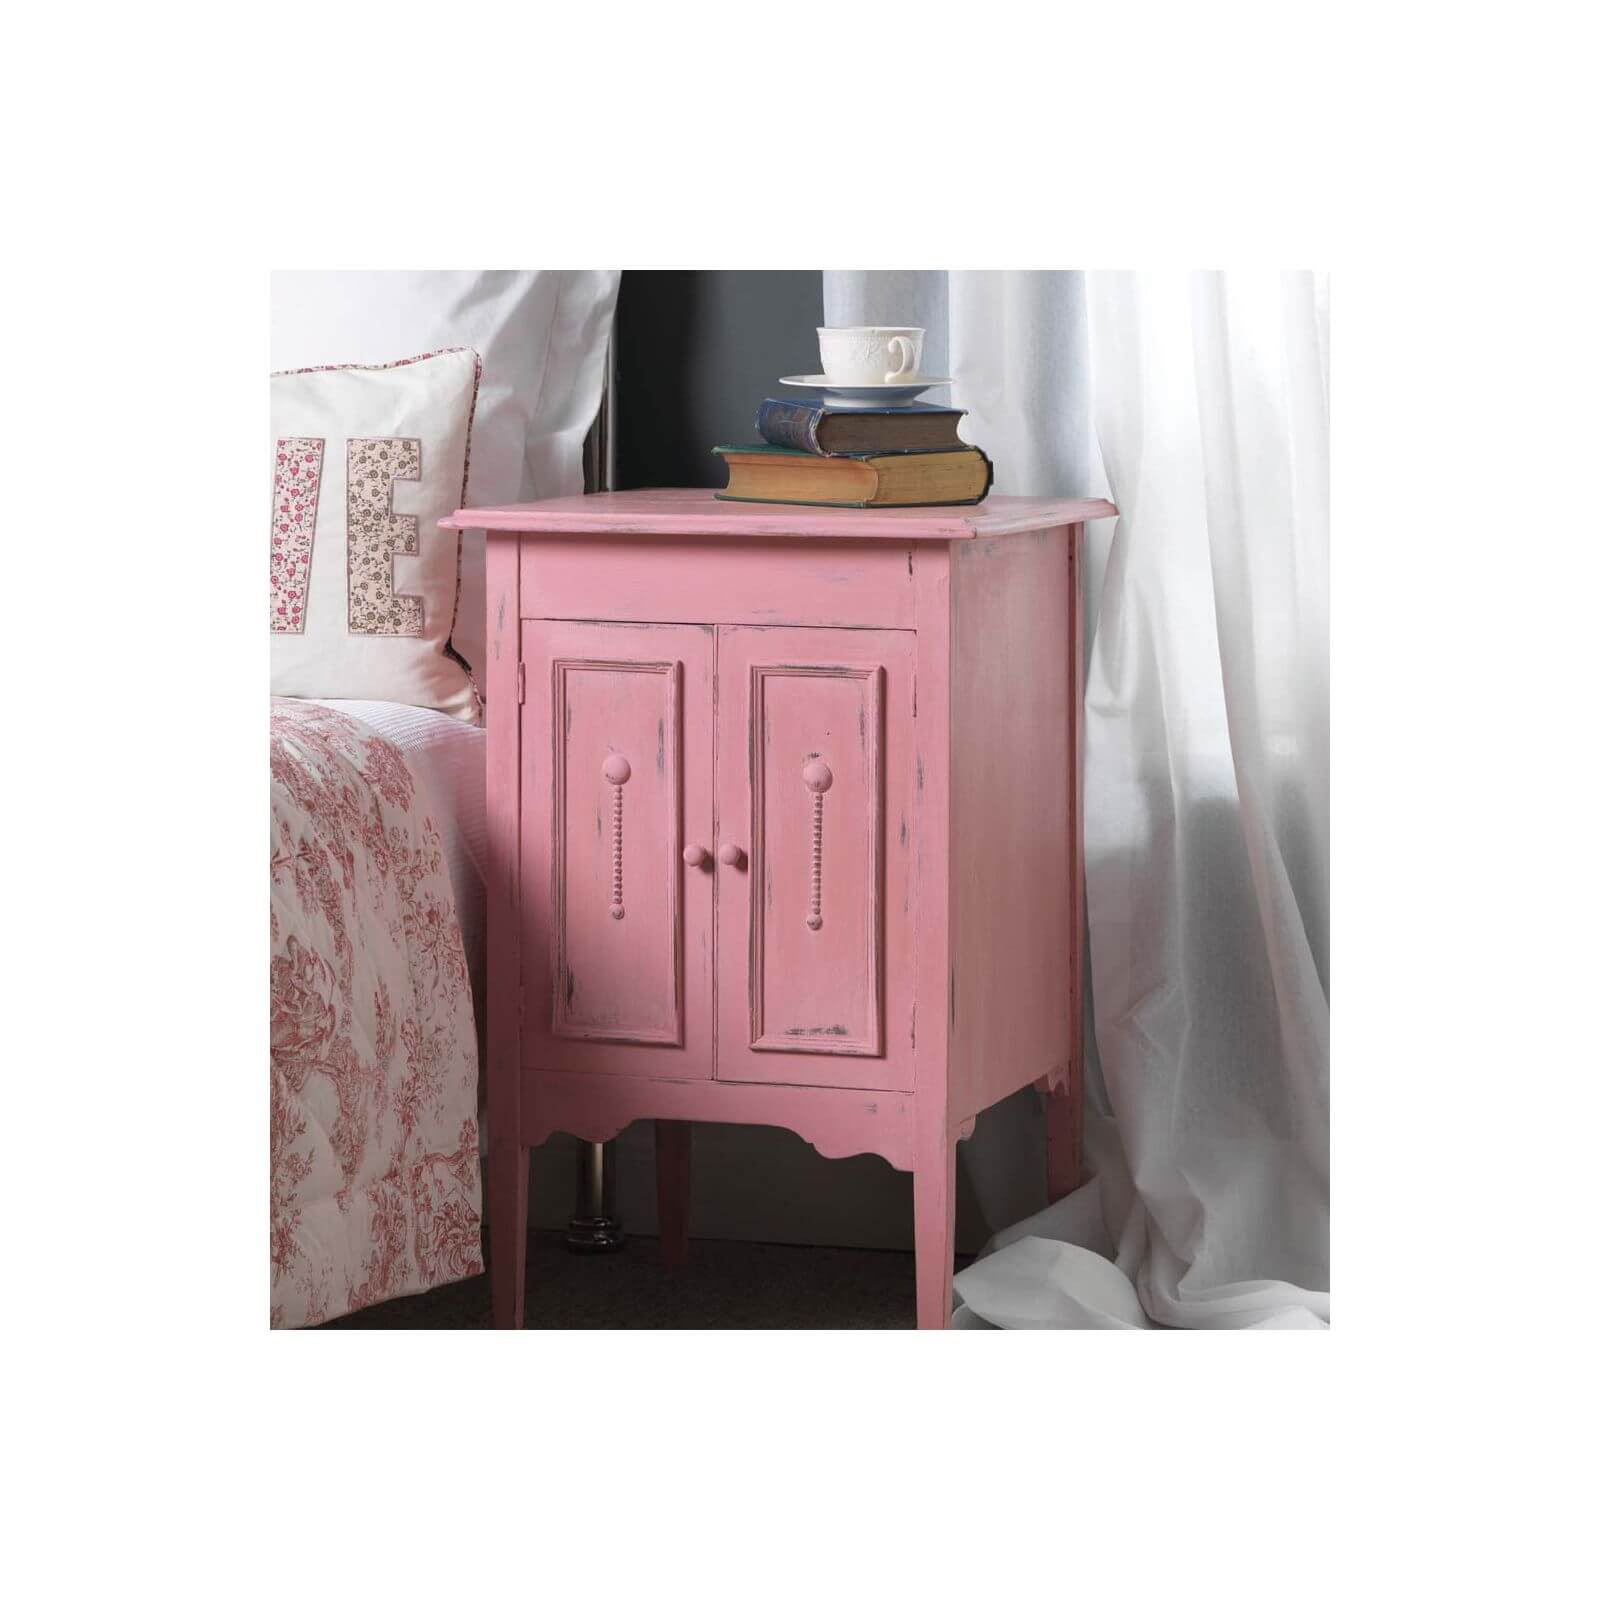 Rust-Oleum Chalky Furniture Paint - Dusky Pink - 125ml